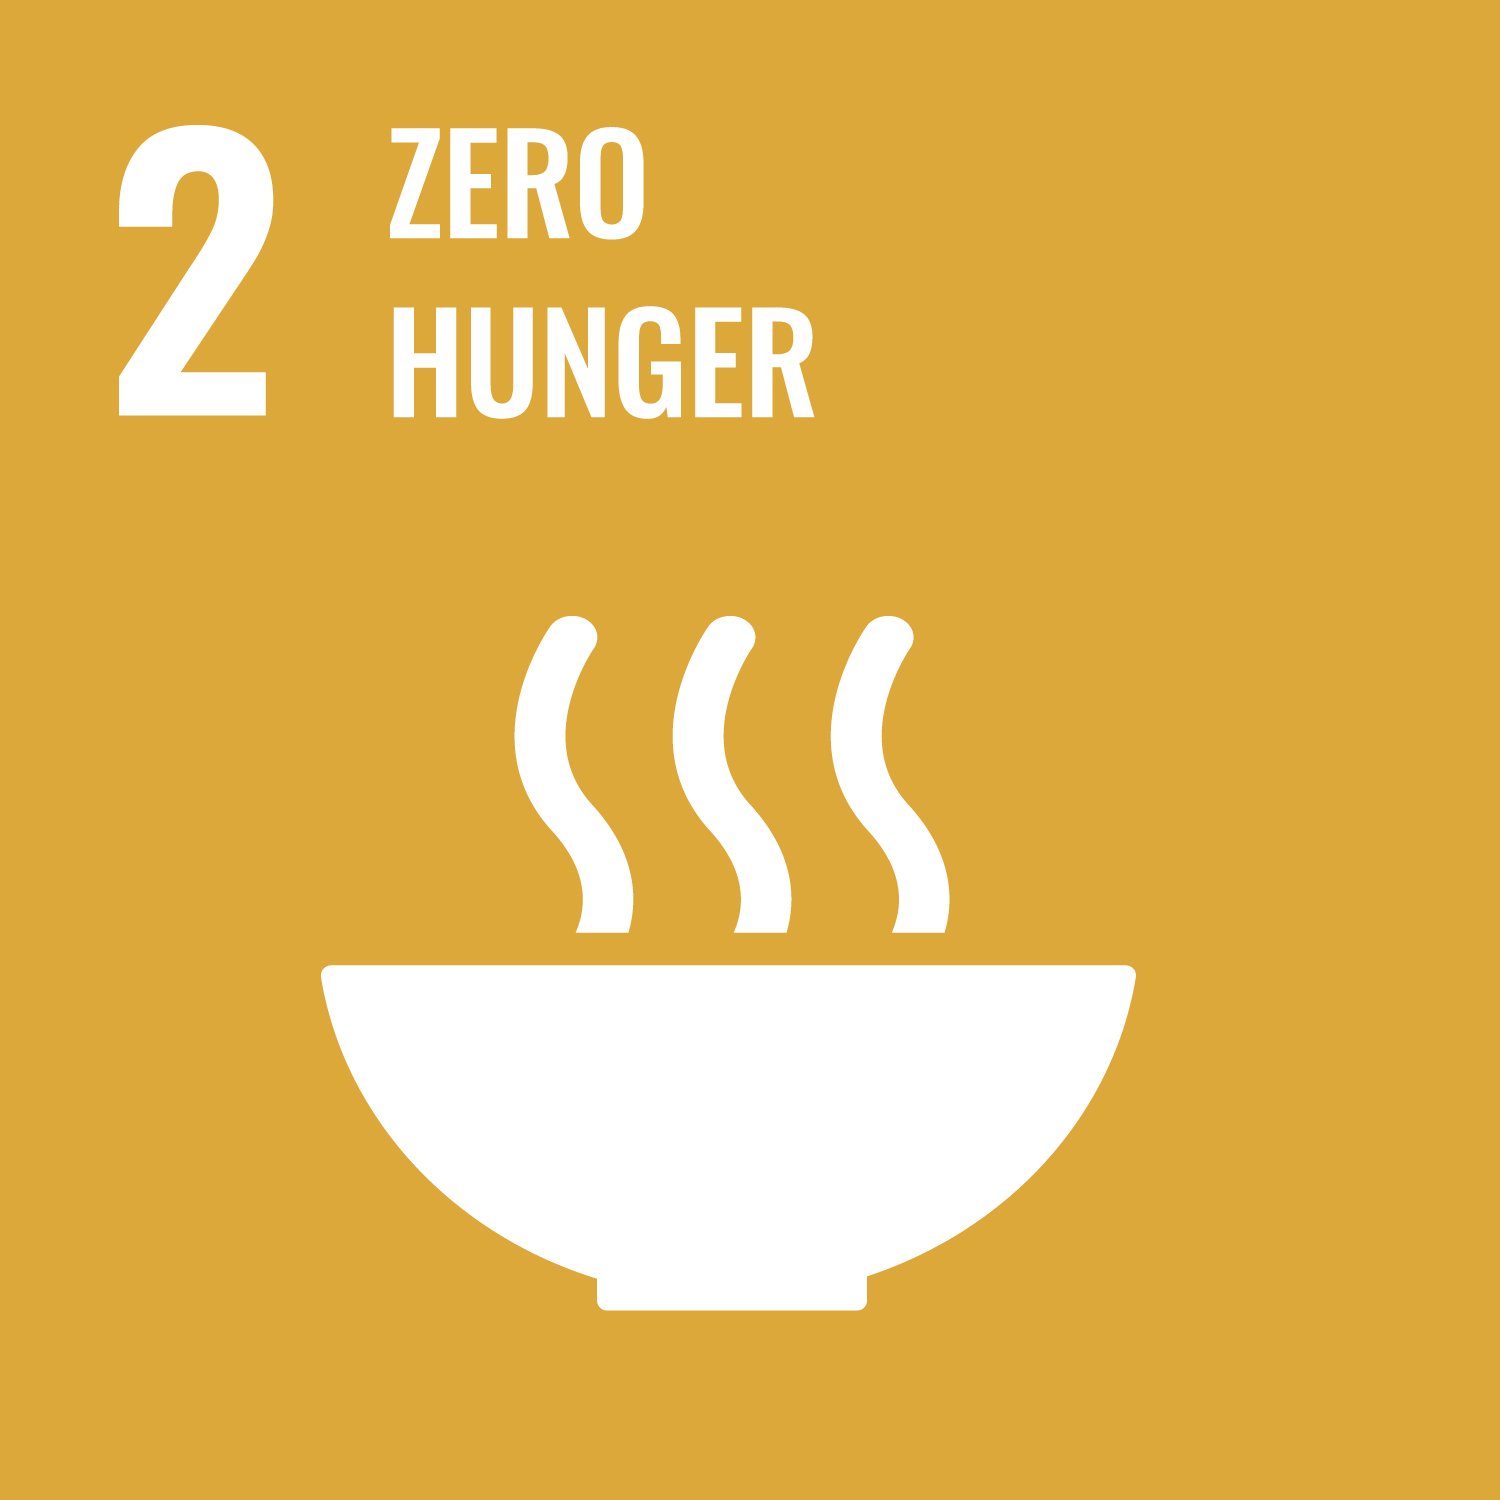 Sustainable Development Goal 2 Zero hunger